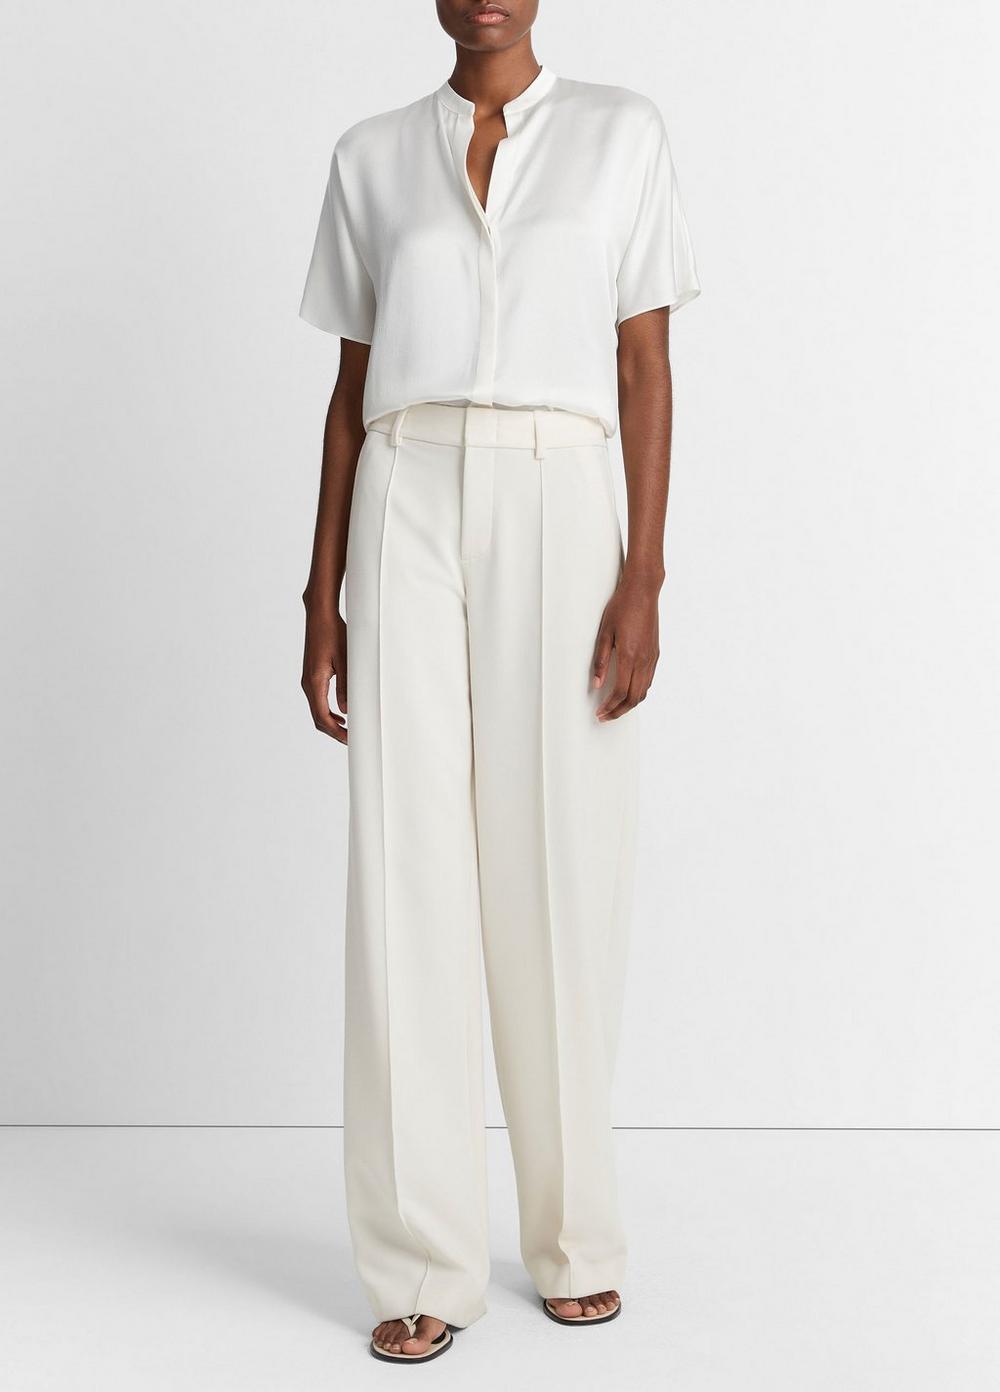 Silk Dolman Short-Sleeve Blouse, Off White, Size L Vince